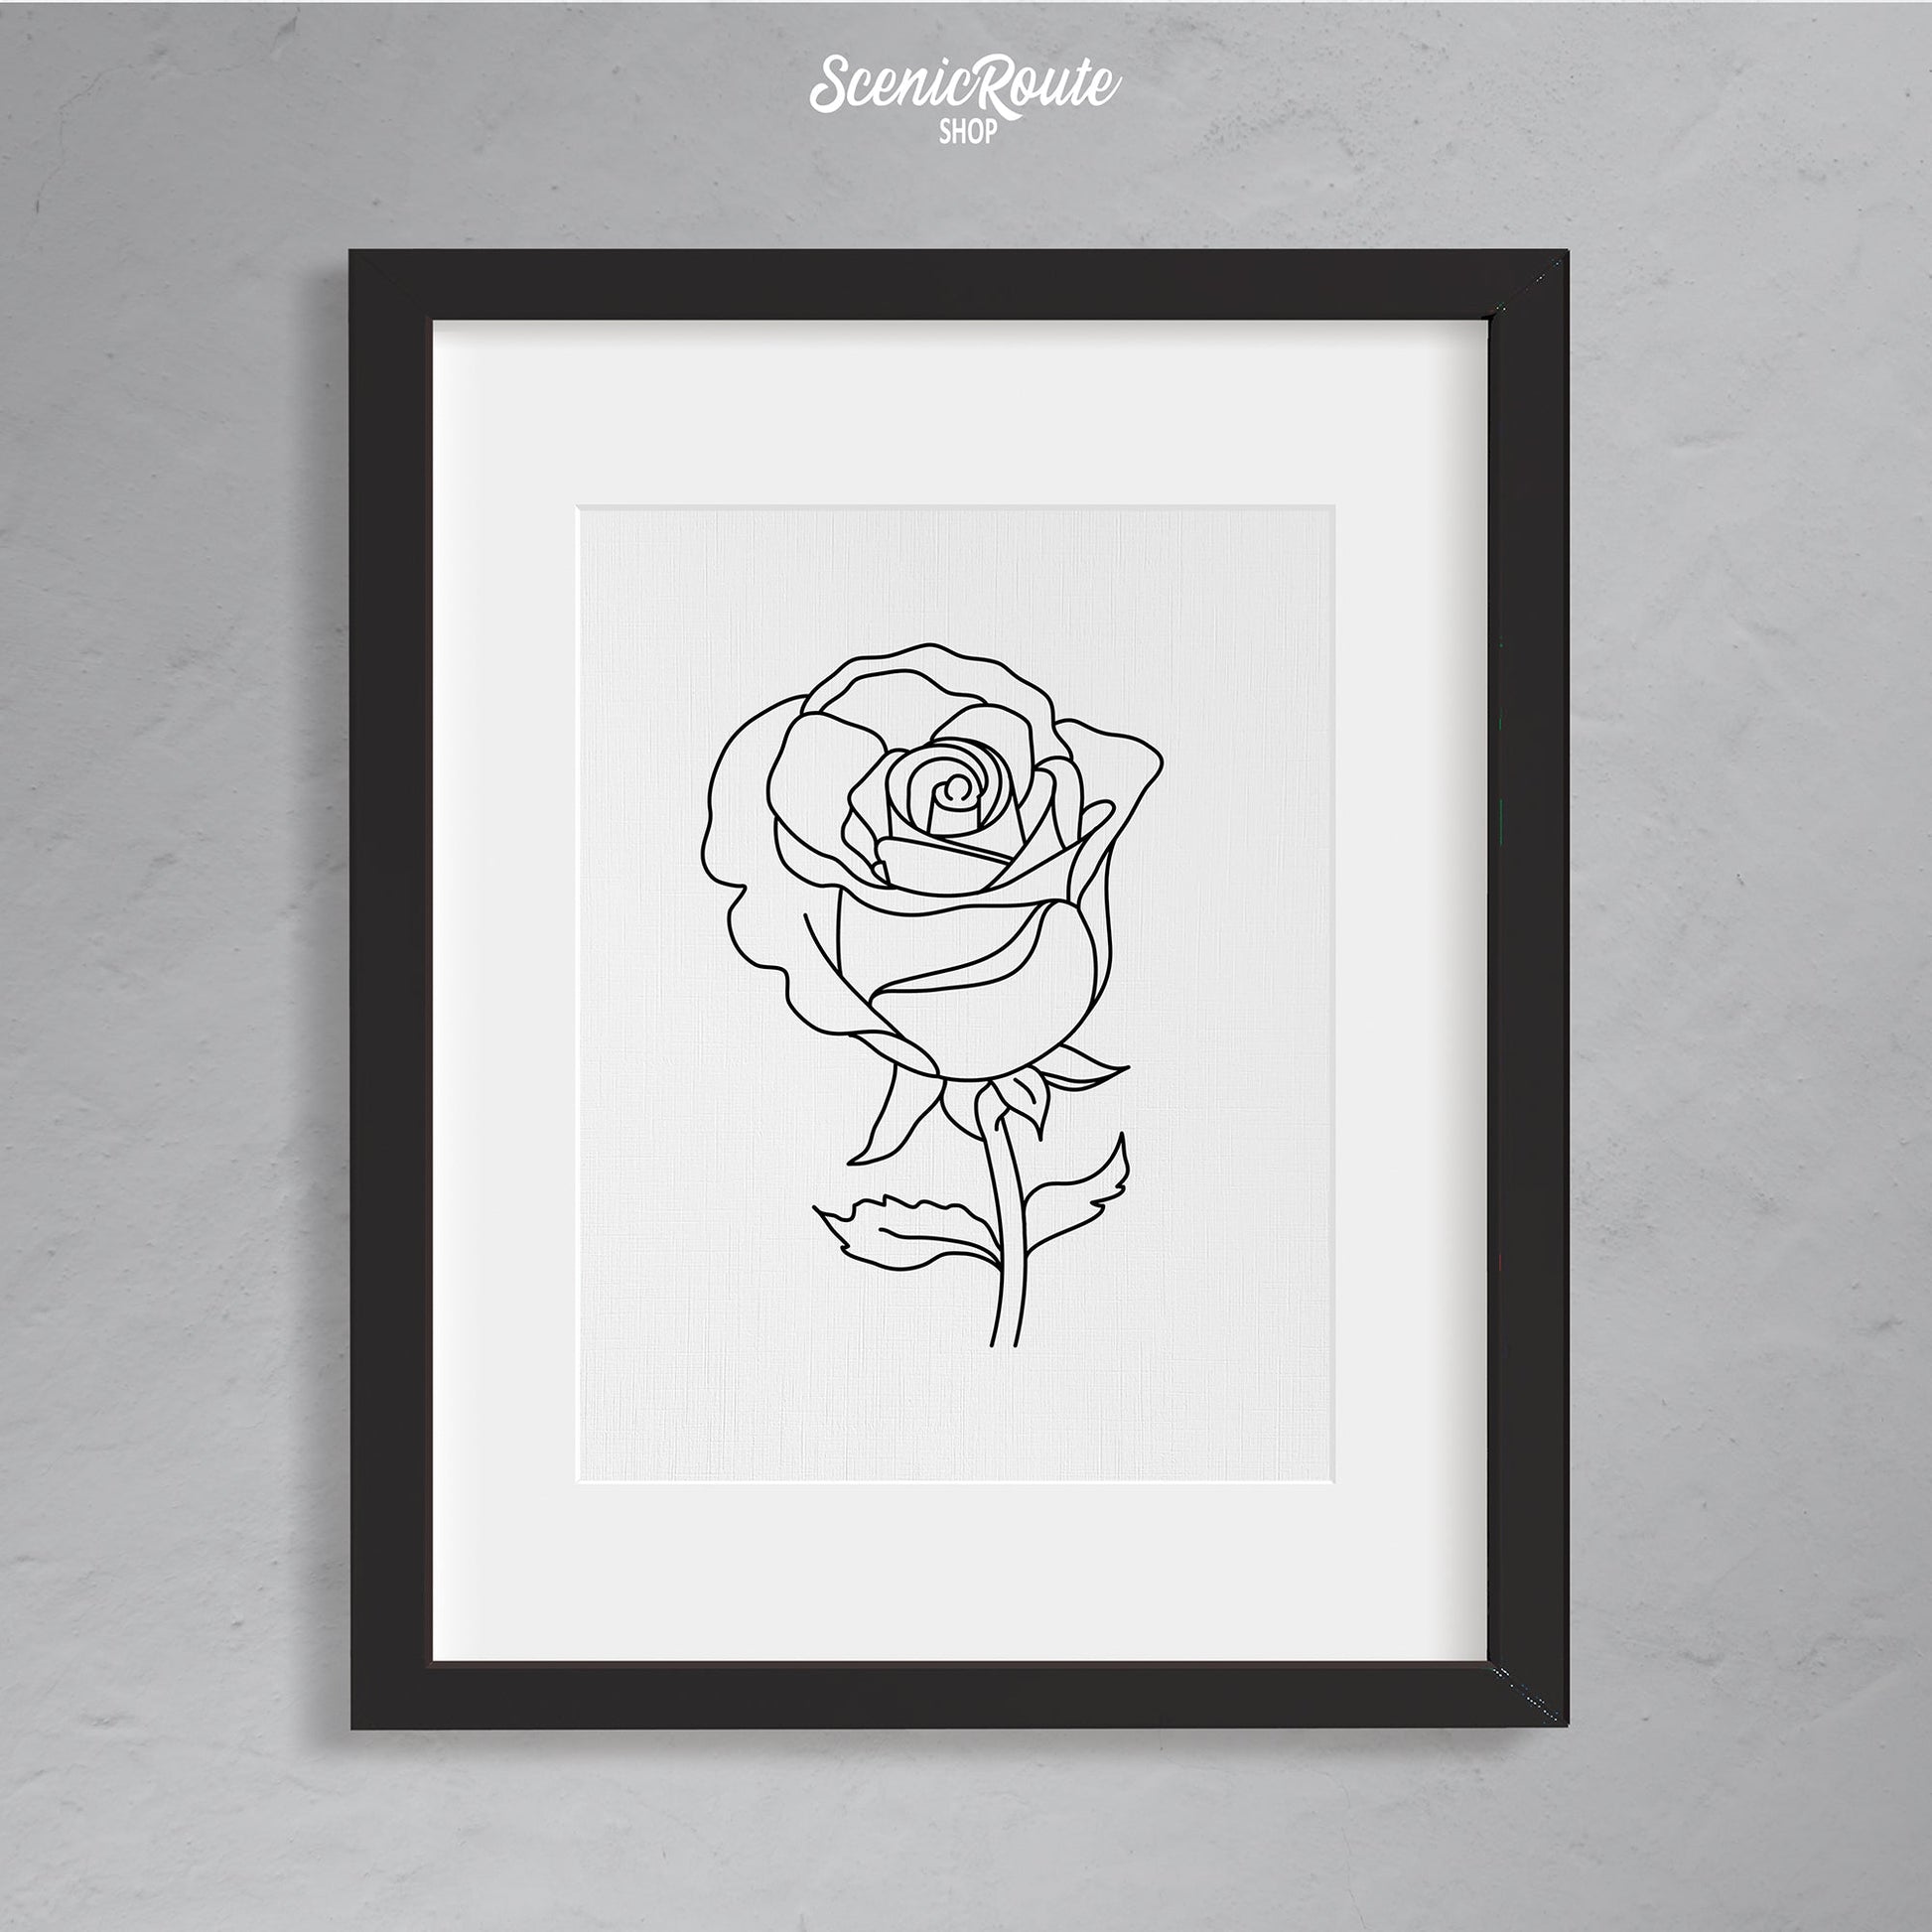 A framed line art drawing of a Rose Flower